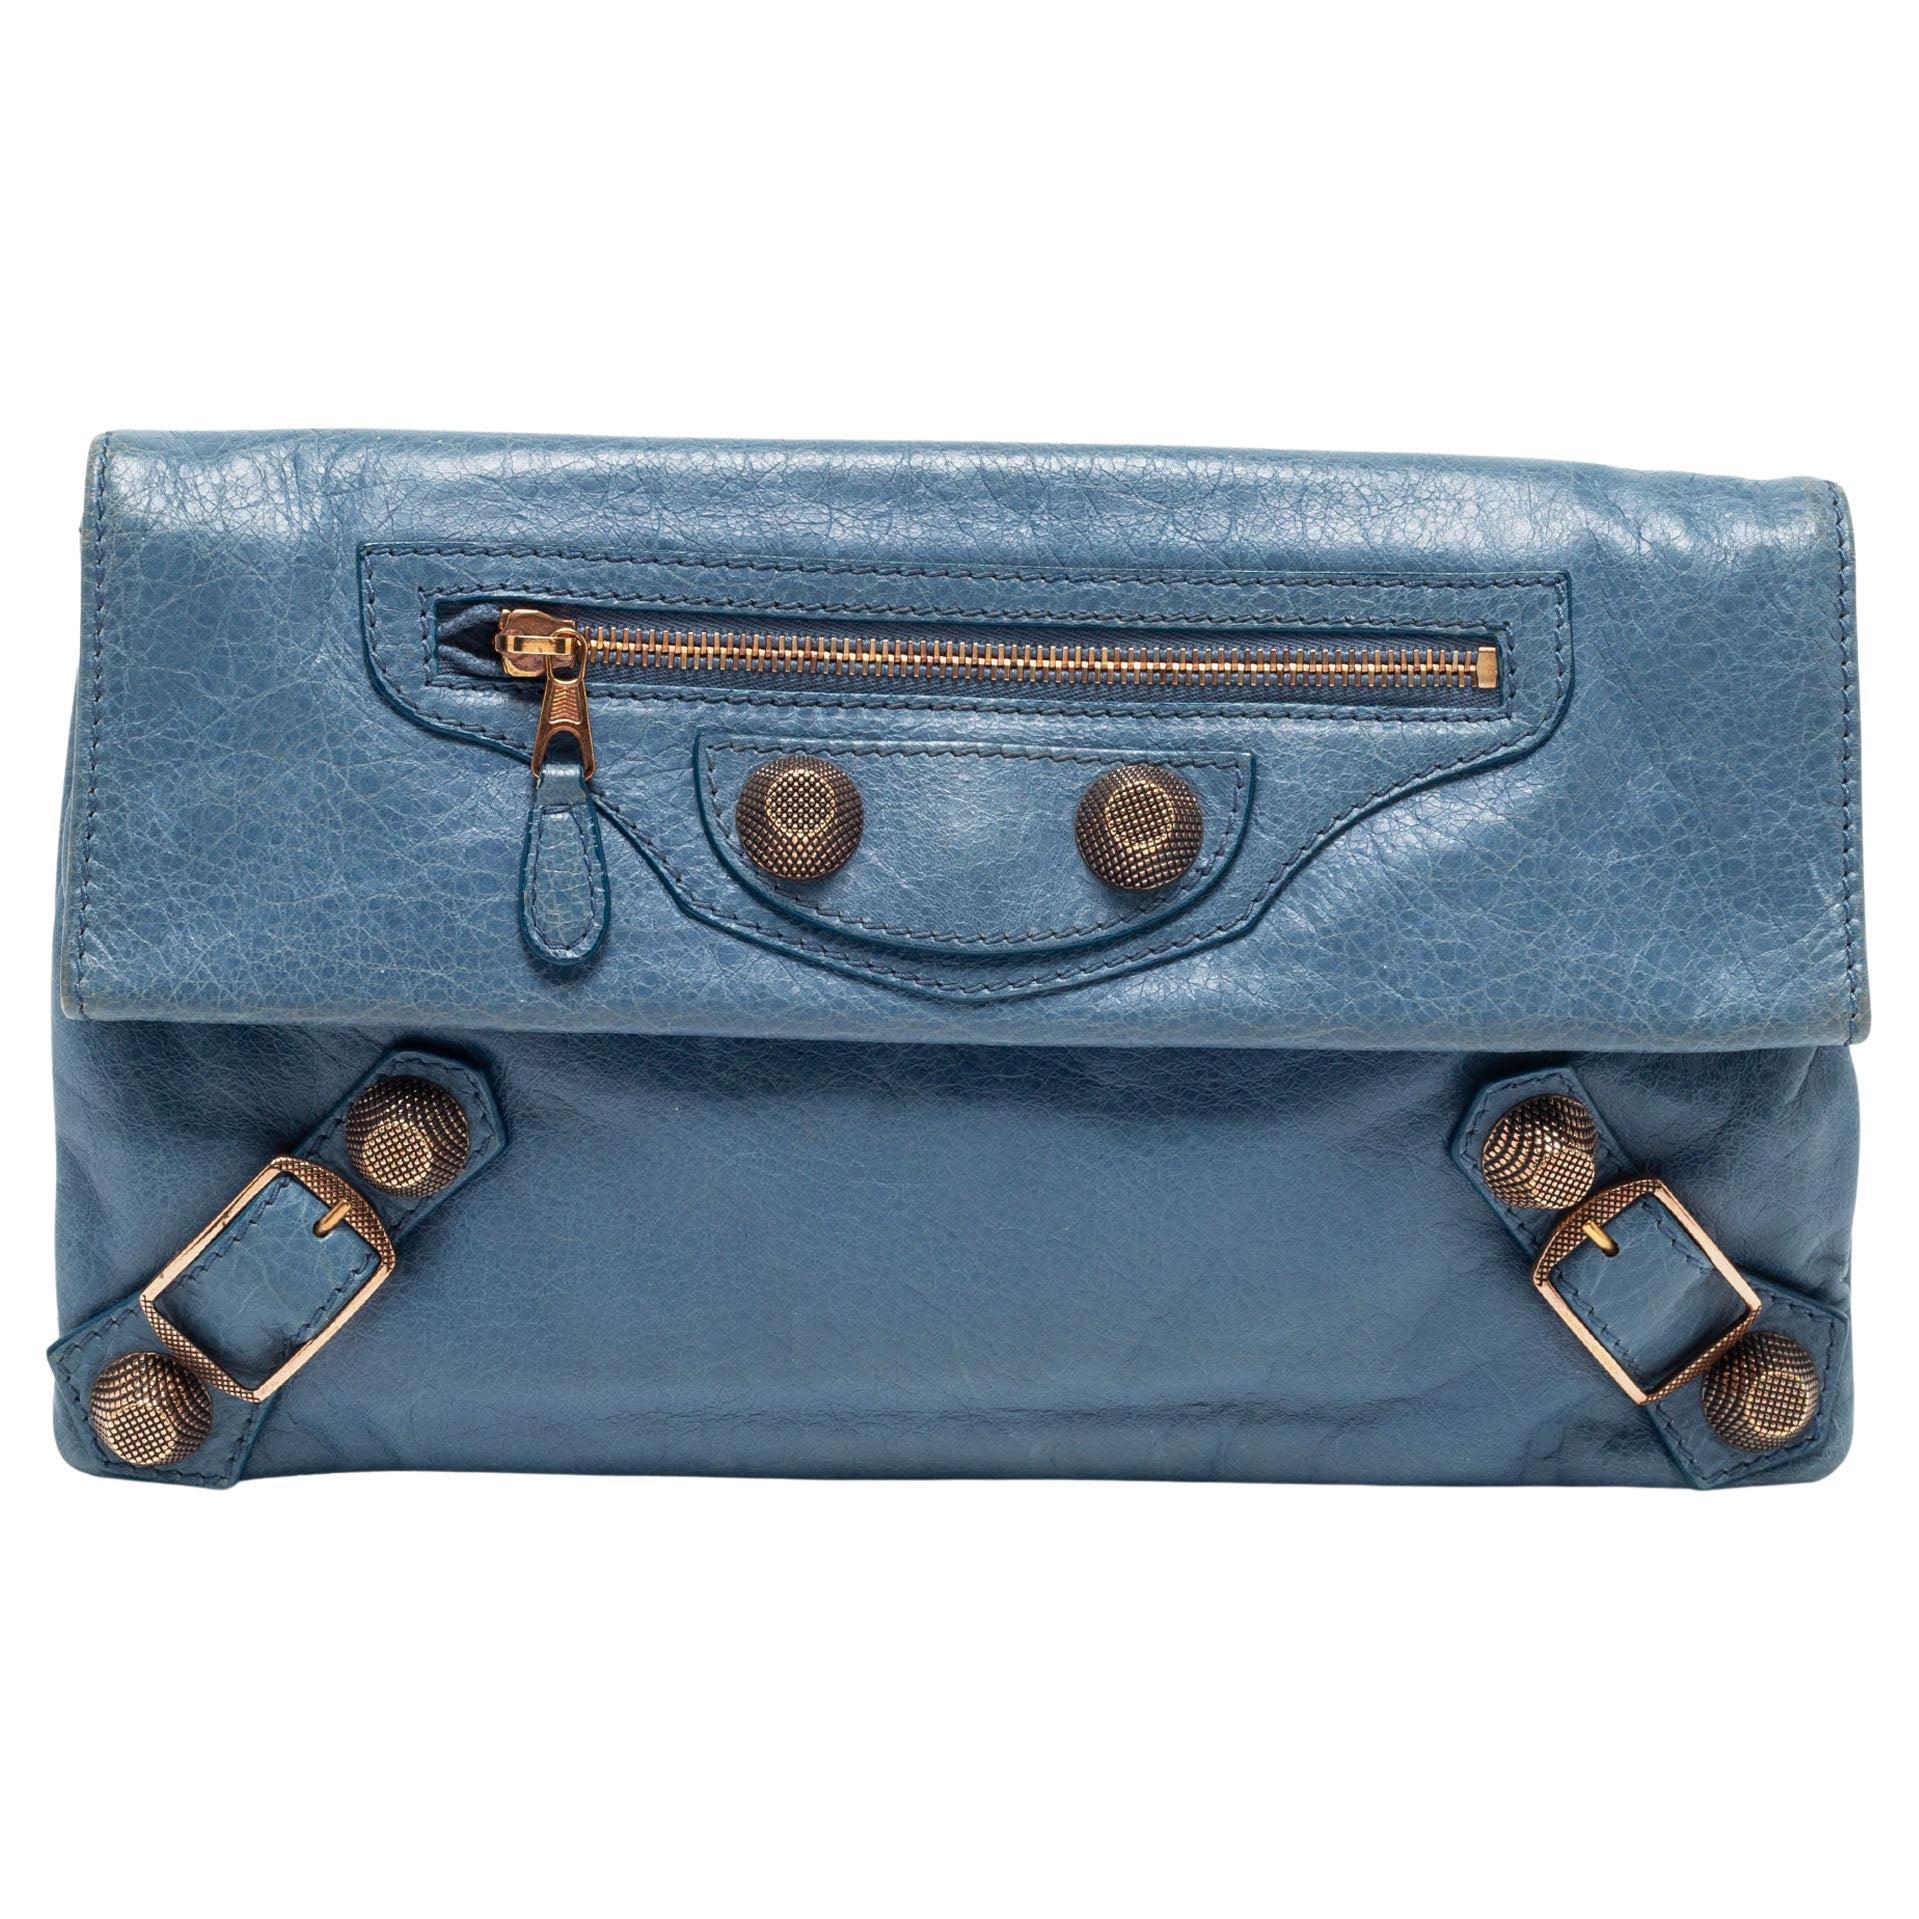 Balenciaga Blue Leather GGH Envelope Clutch